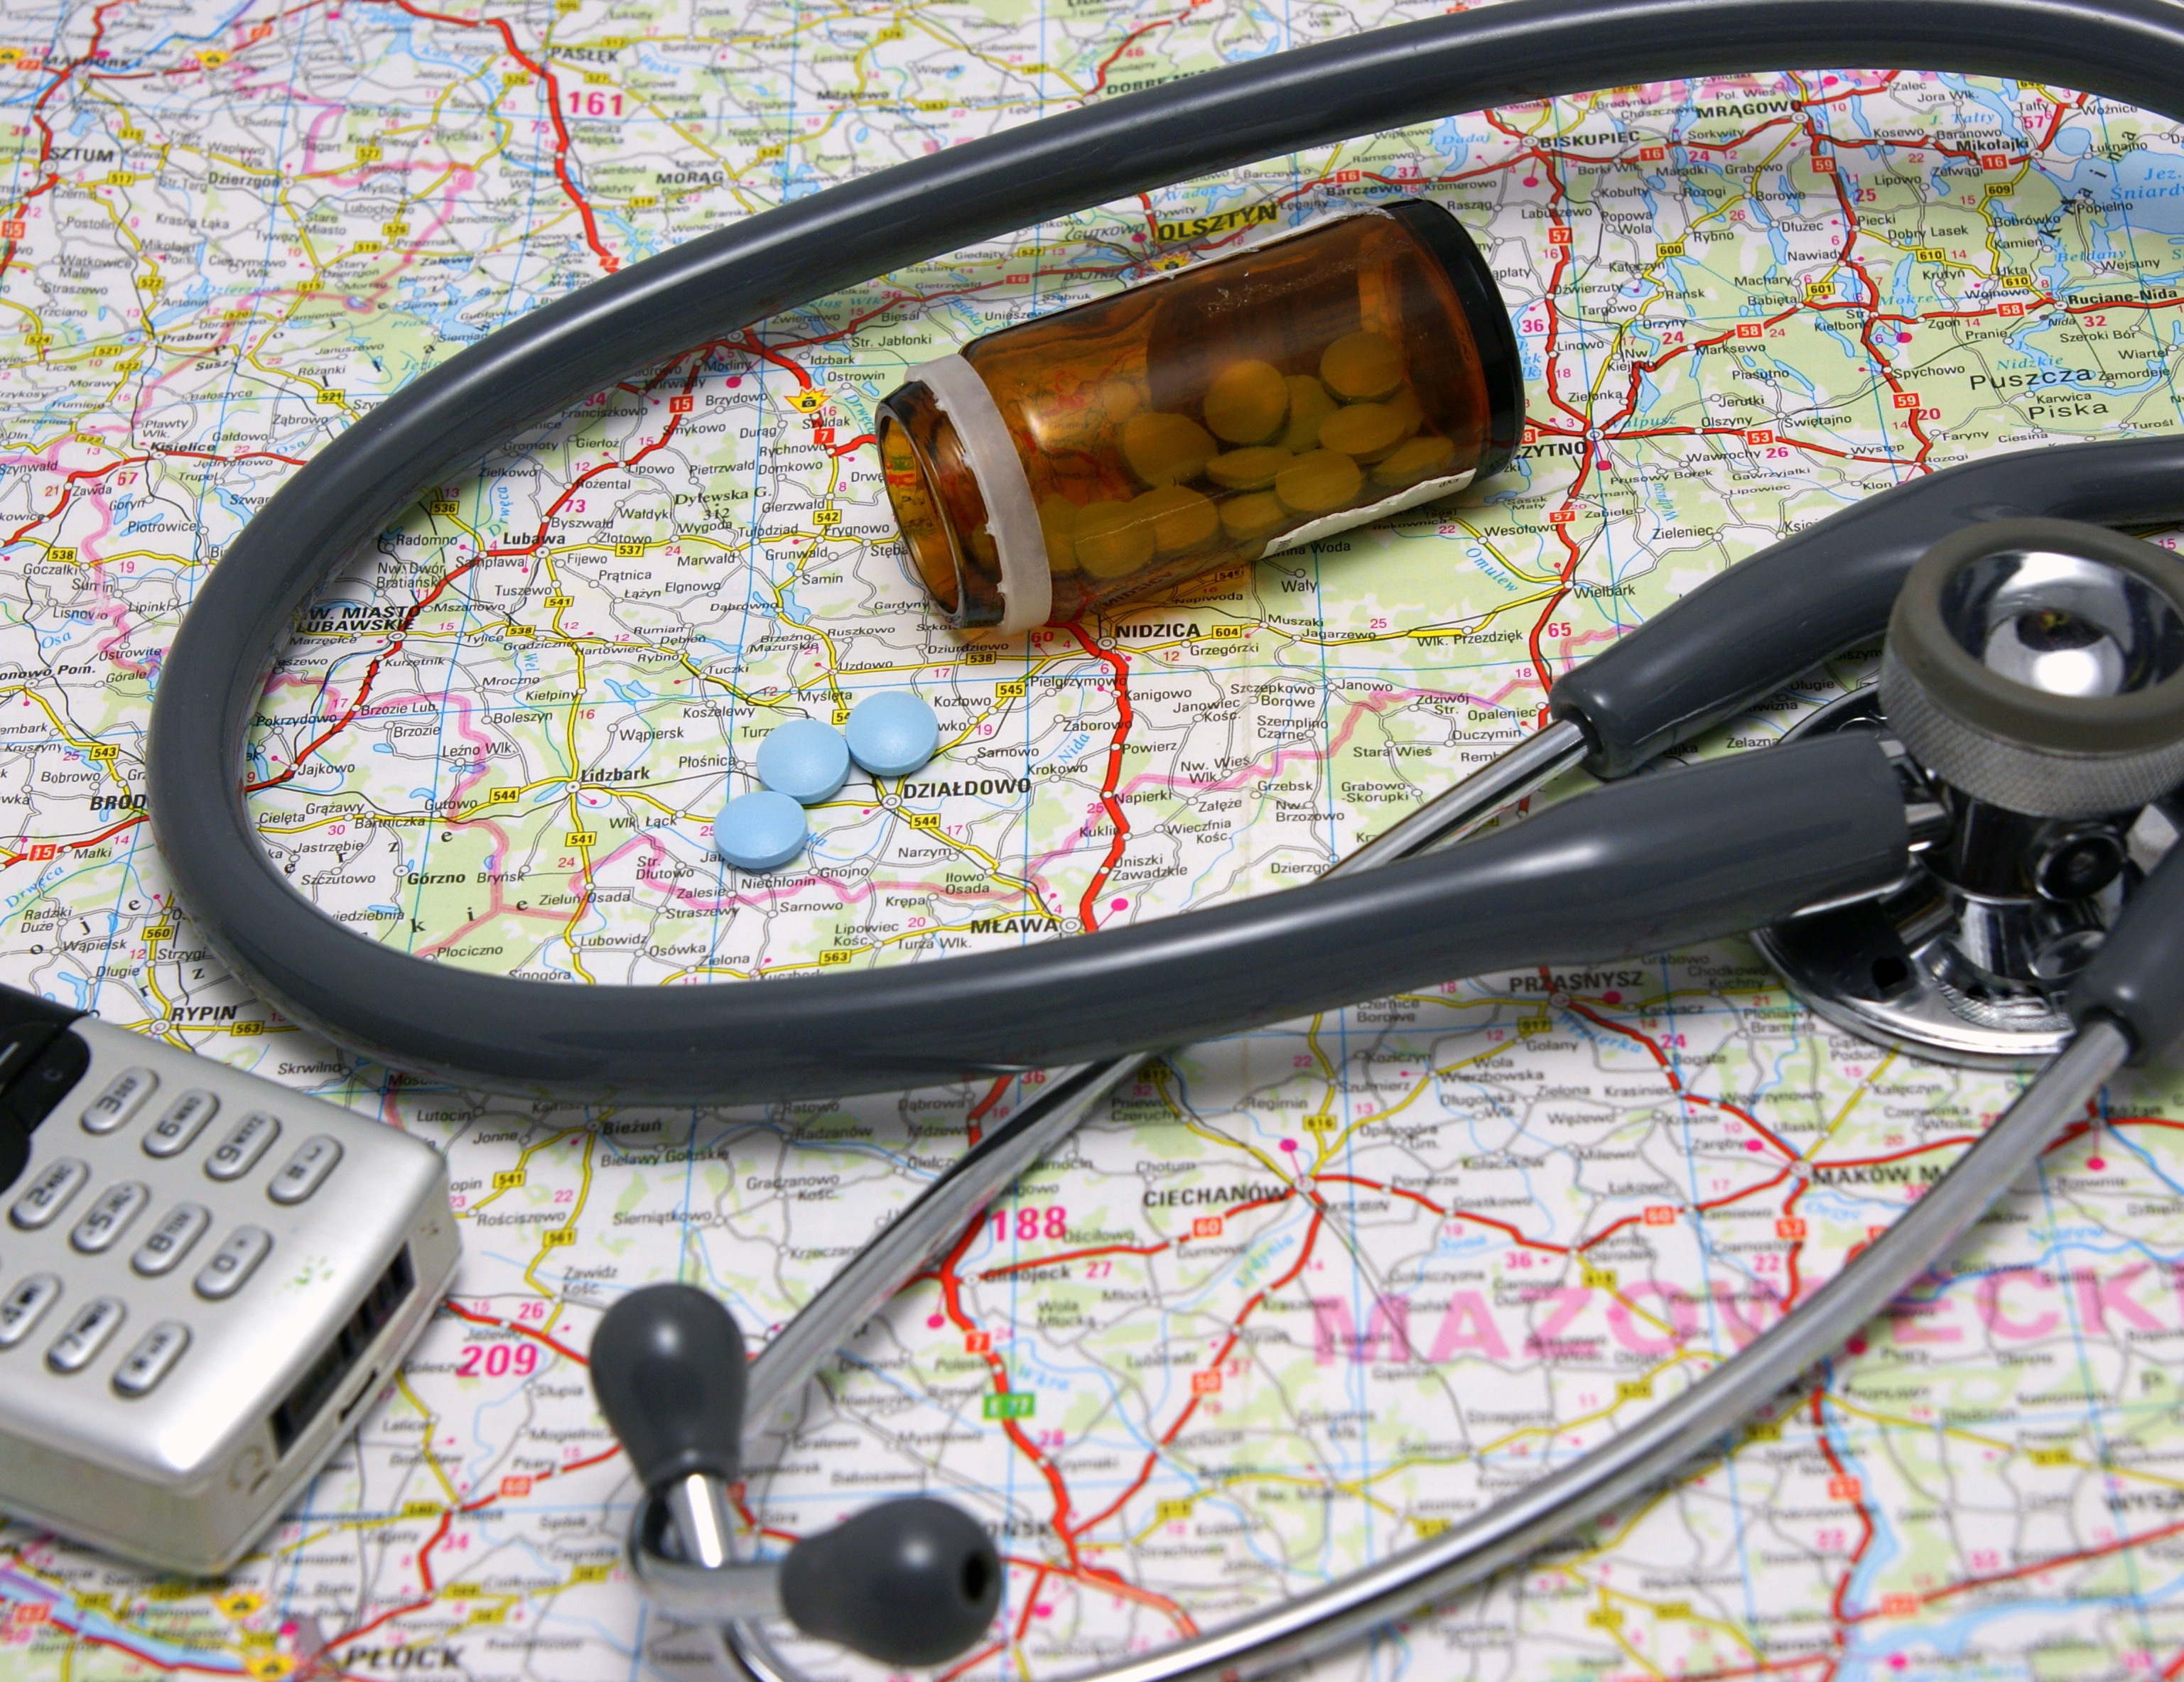 Map, stethoscope, prescription, cell phone